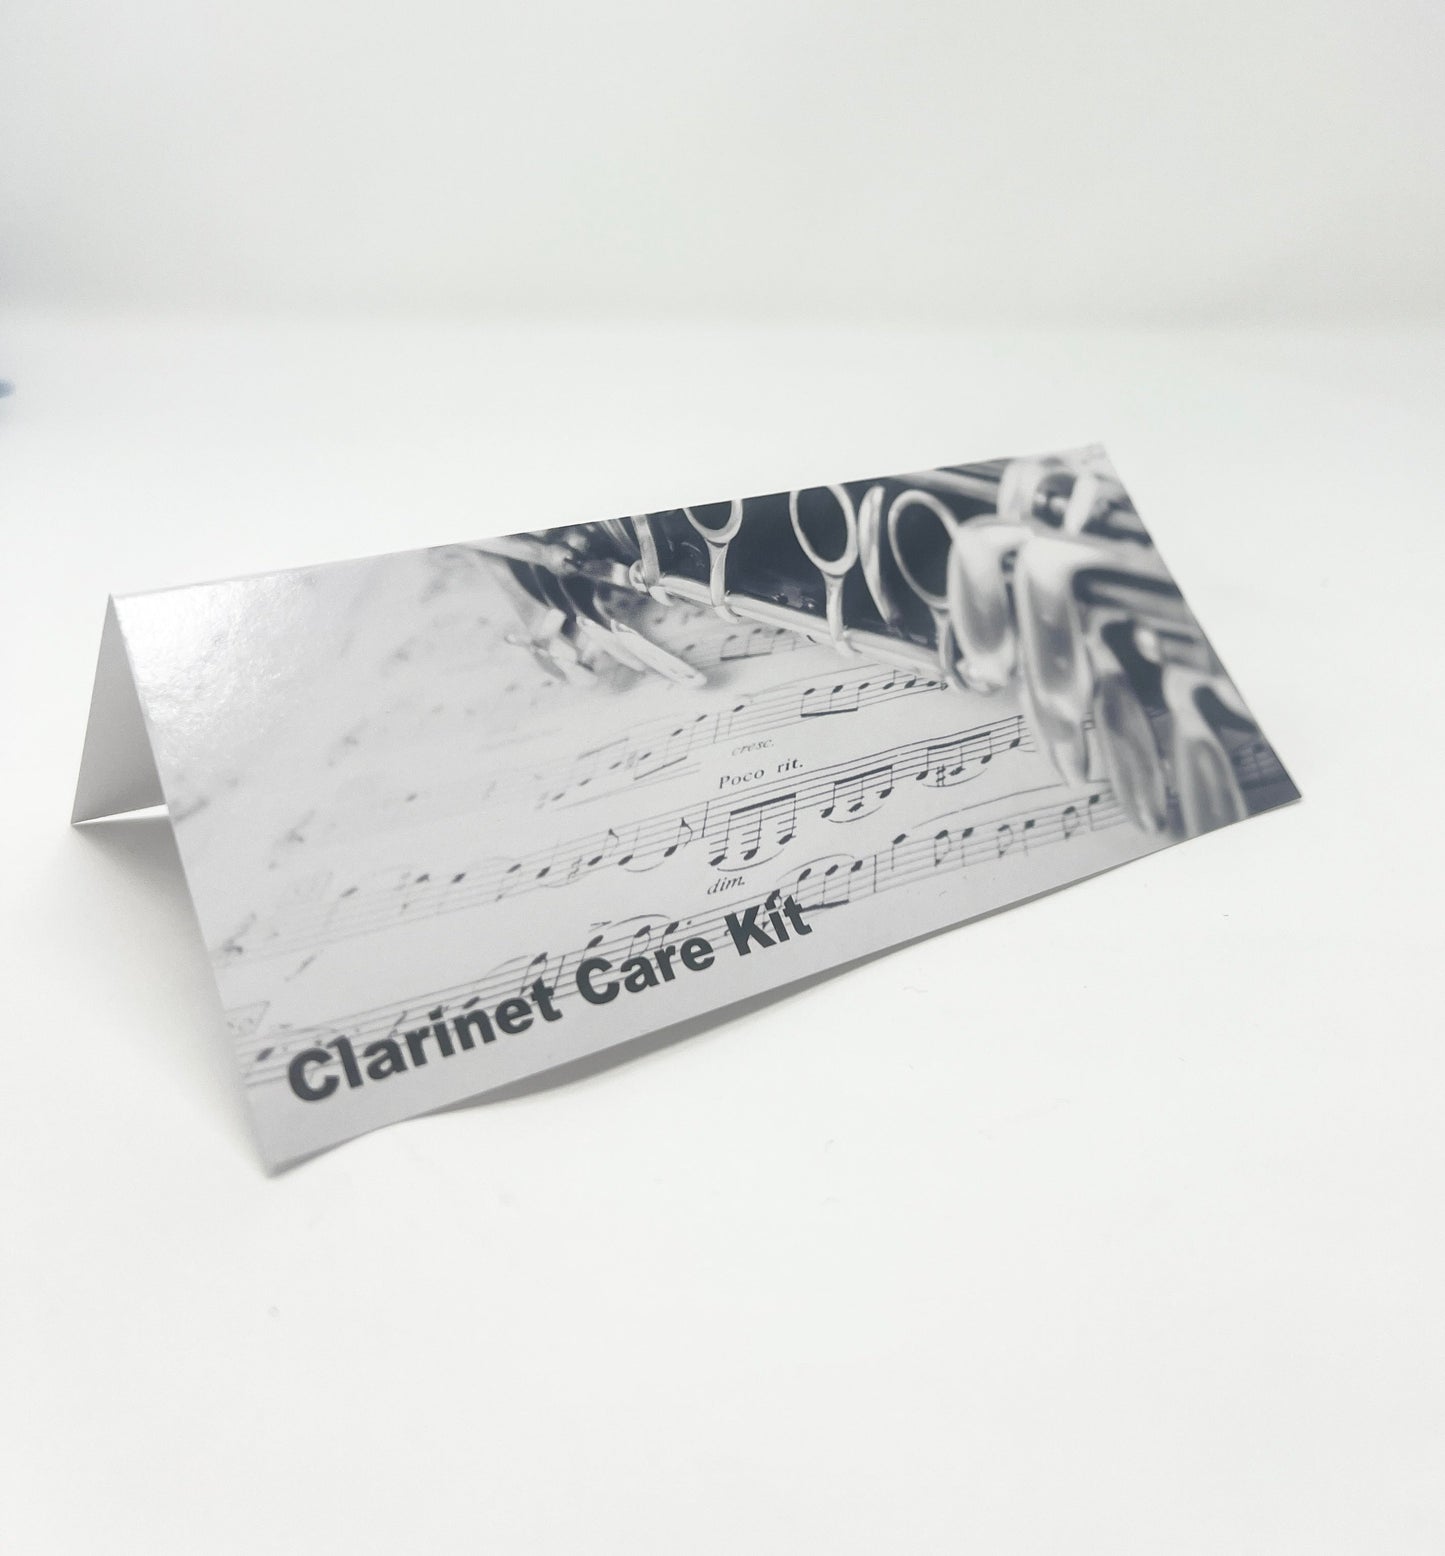 Clarinet Care Kit Header